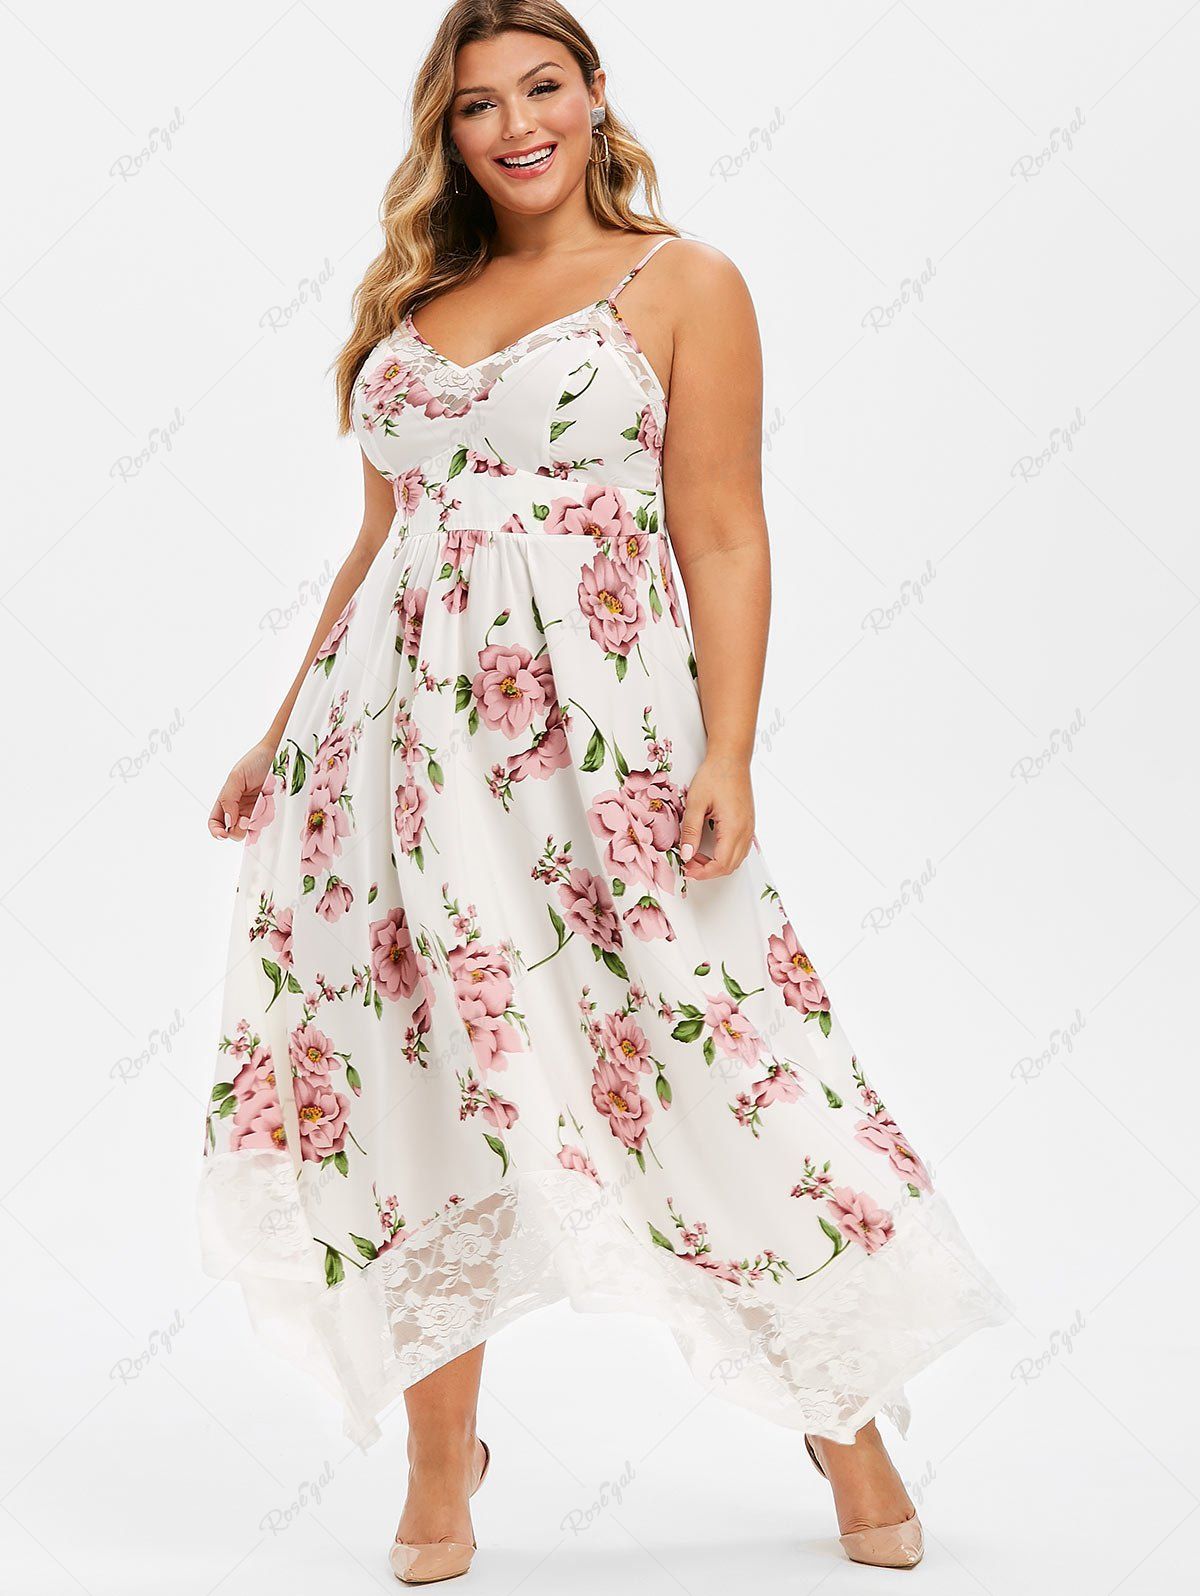 Chic Plus Size Flower Print Lace Panel Asymmetrical Dress  